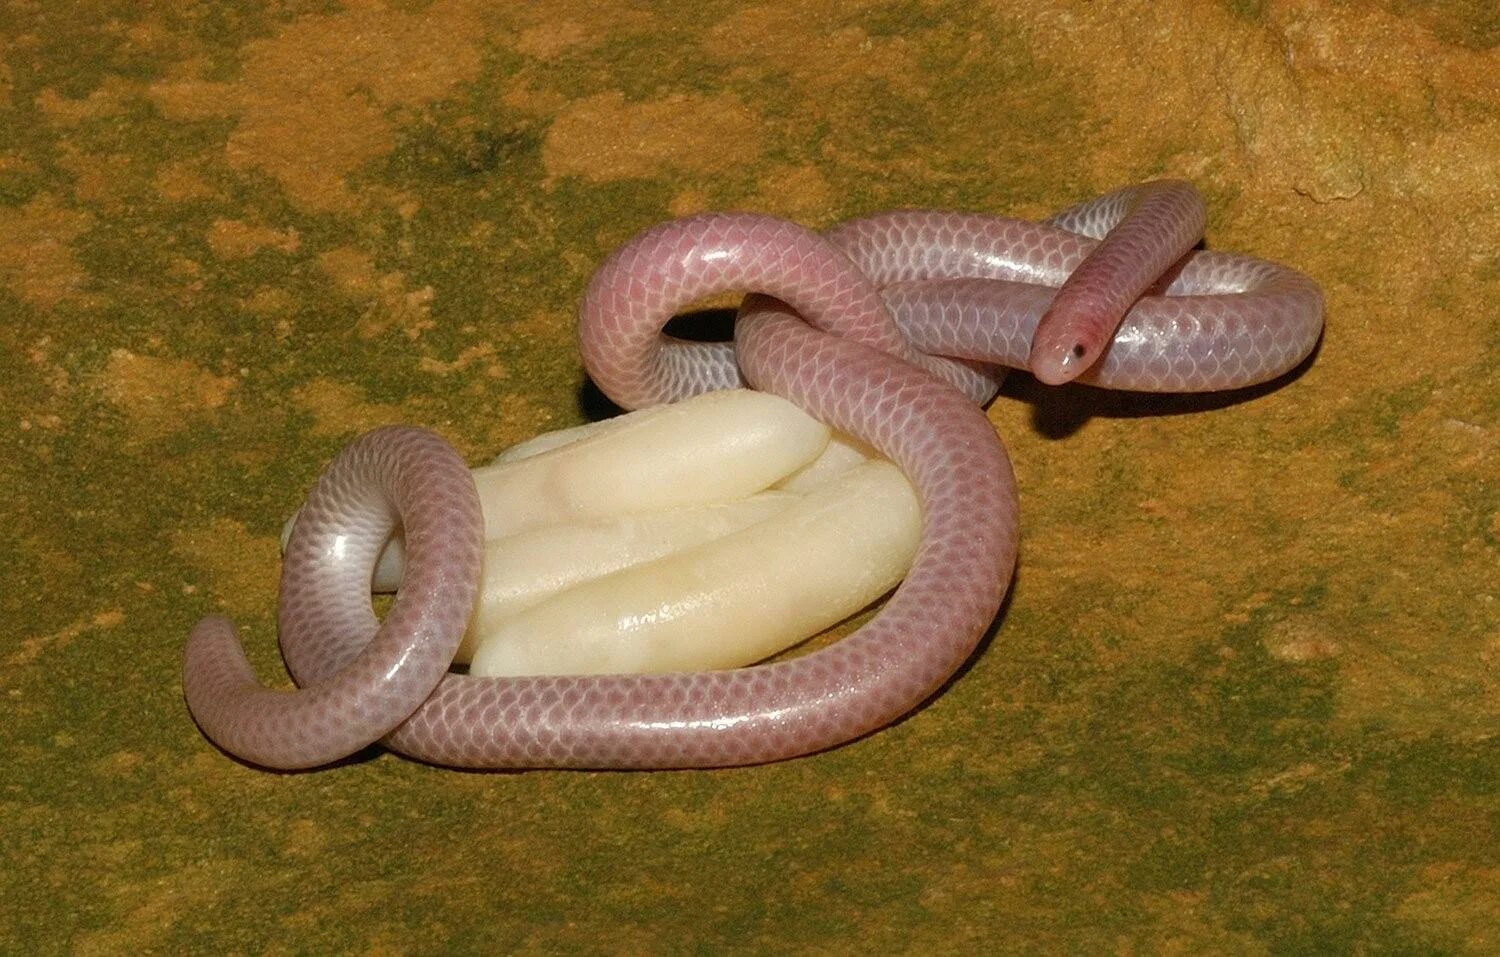 Змея была маленькая. Барбадосская узкоротая змея. Розовый питон. Розовая змея.